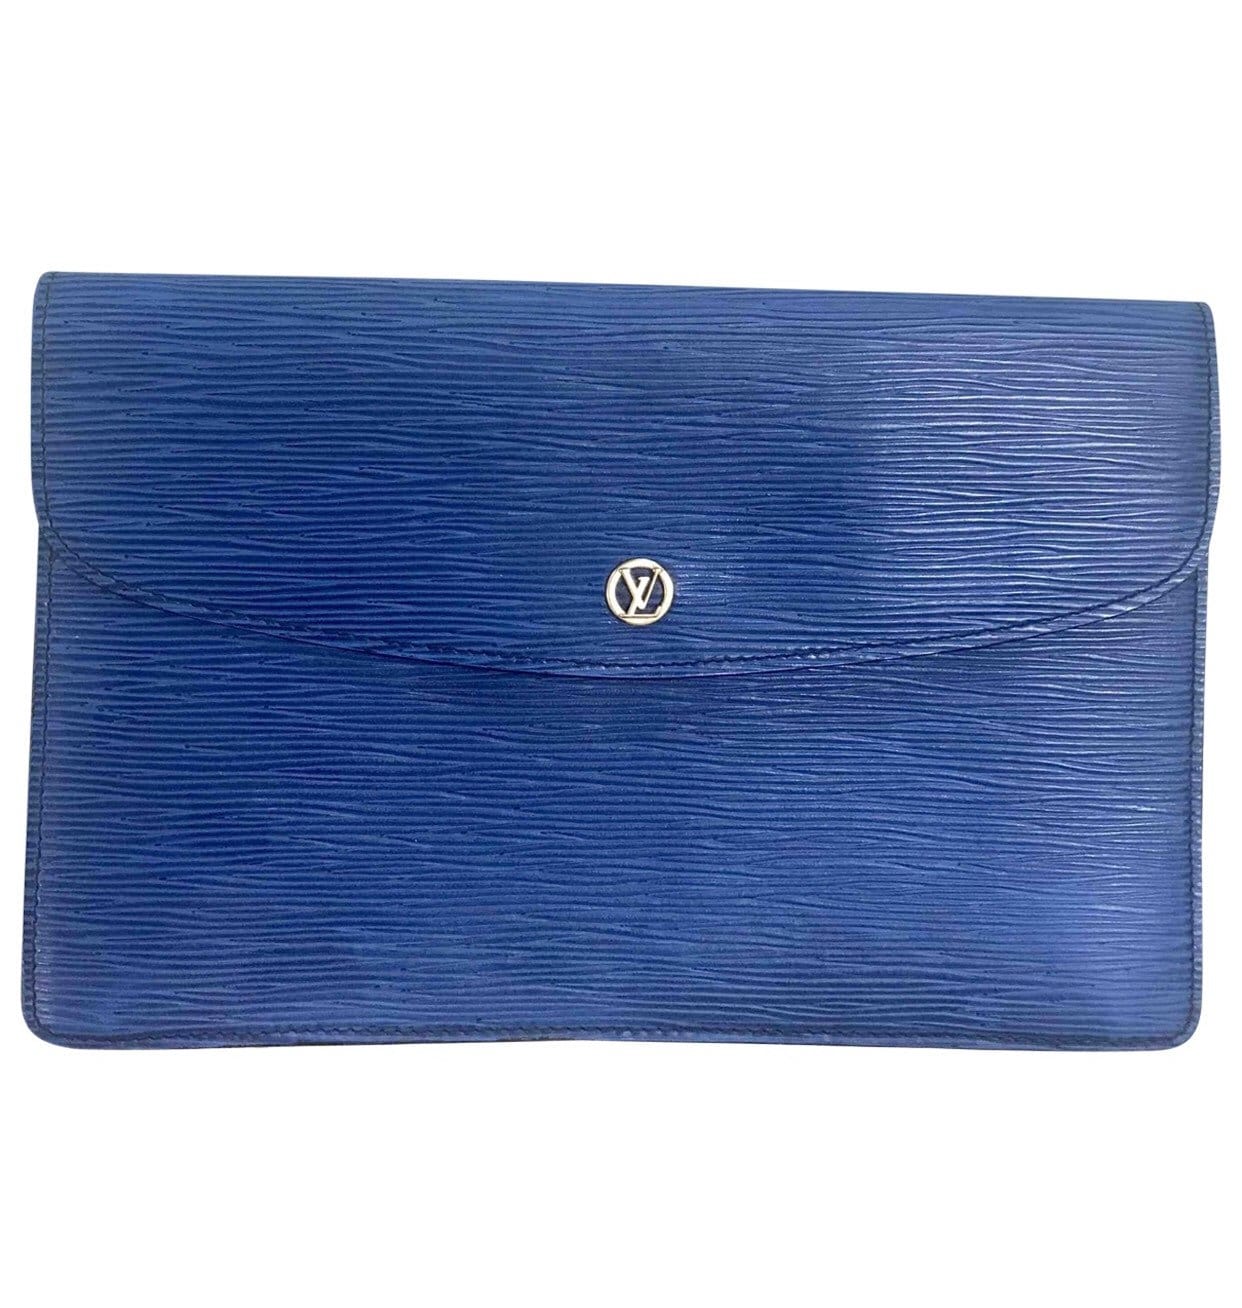 Brise ubehagelig anden Vintage Louis Vuitton Blue Epi Envelope Style Clutch Bag With | Etsy